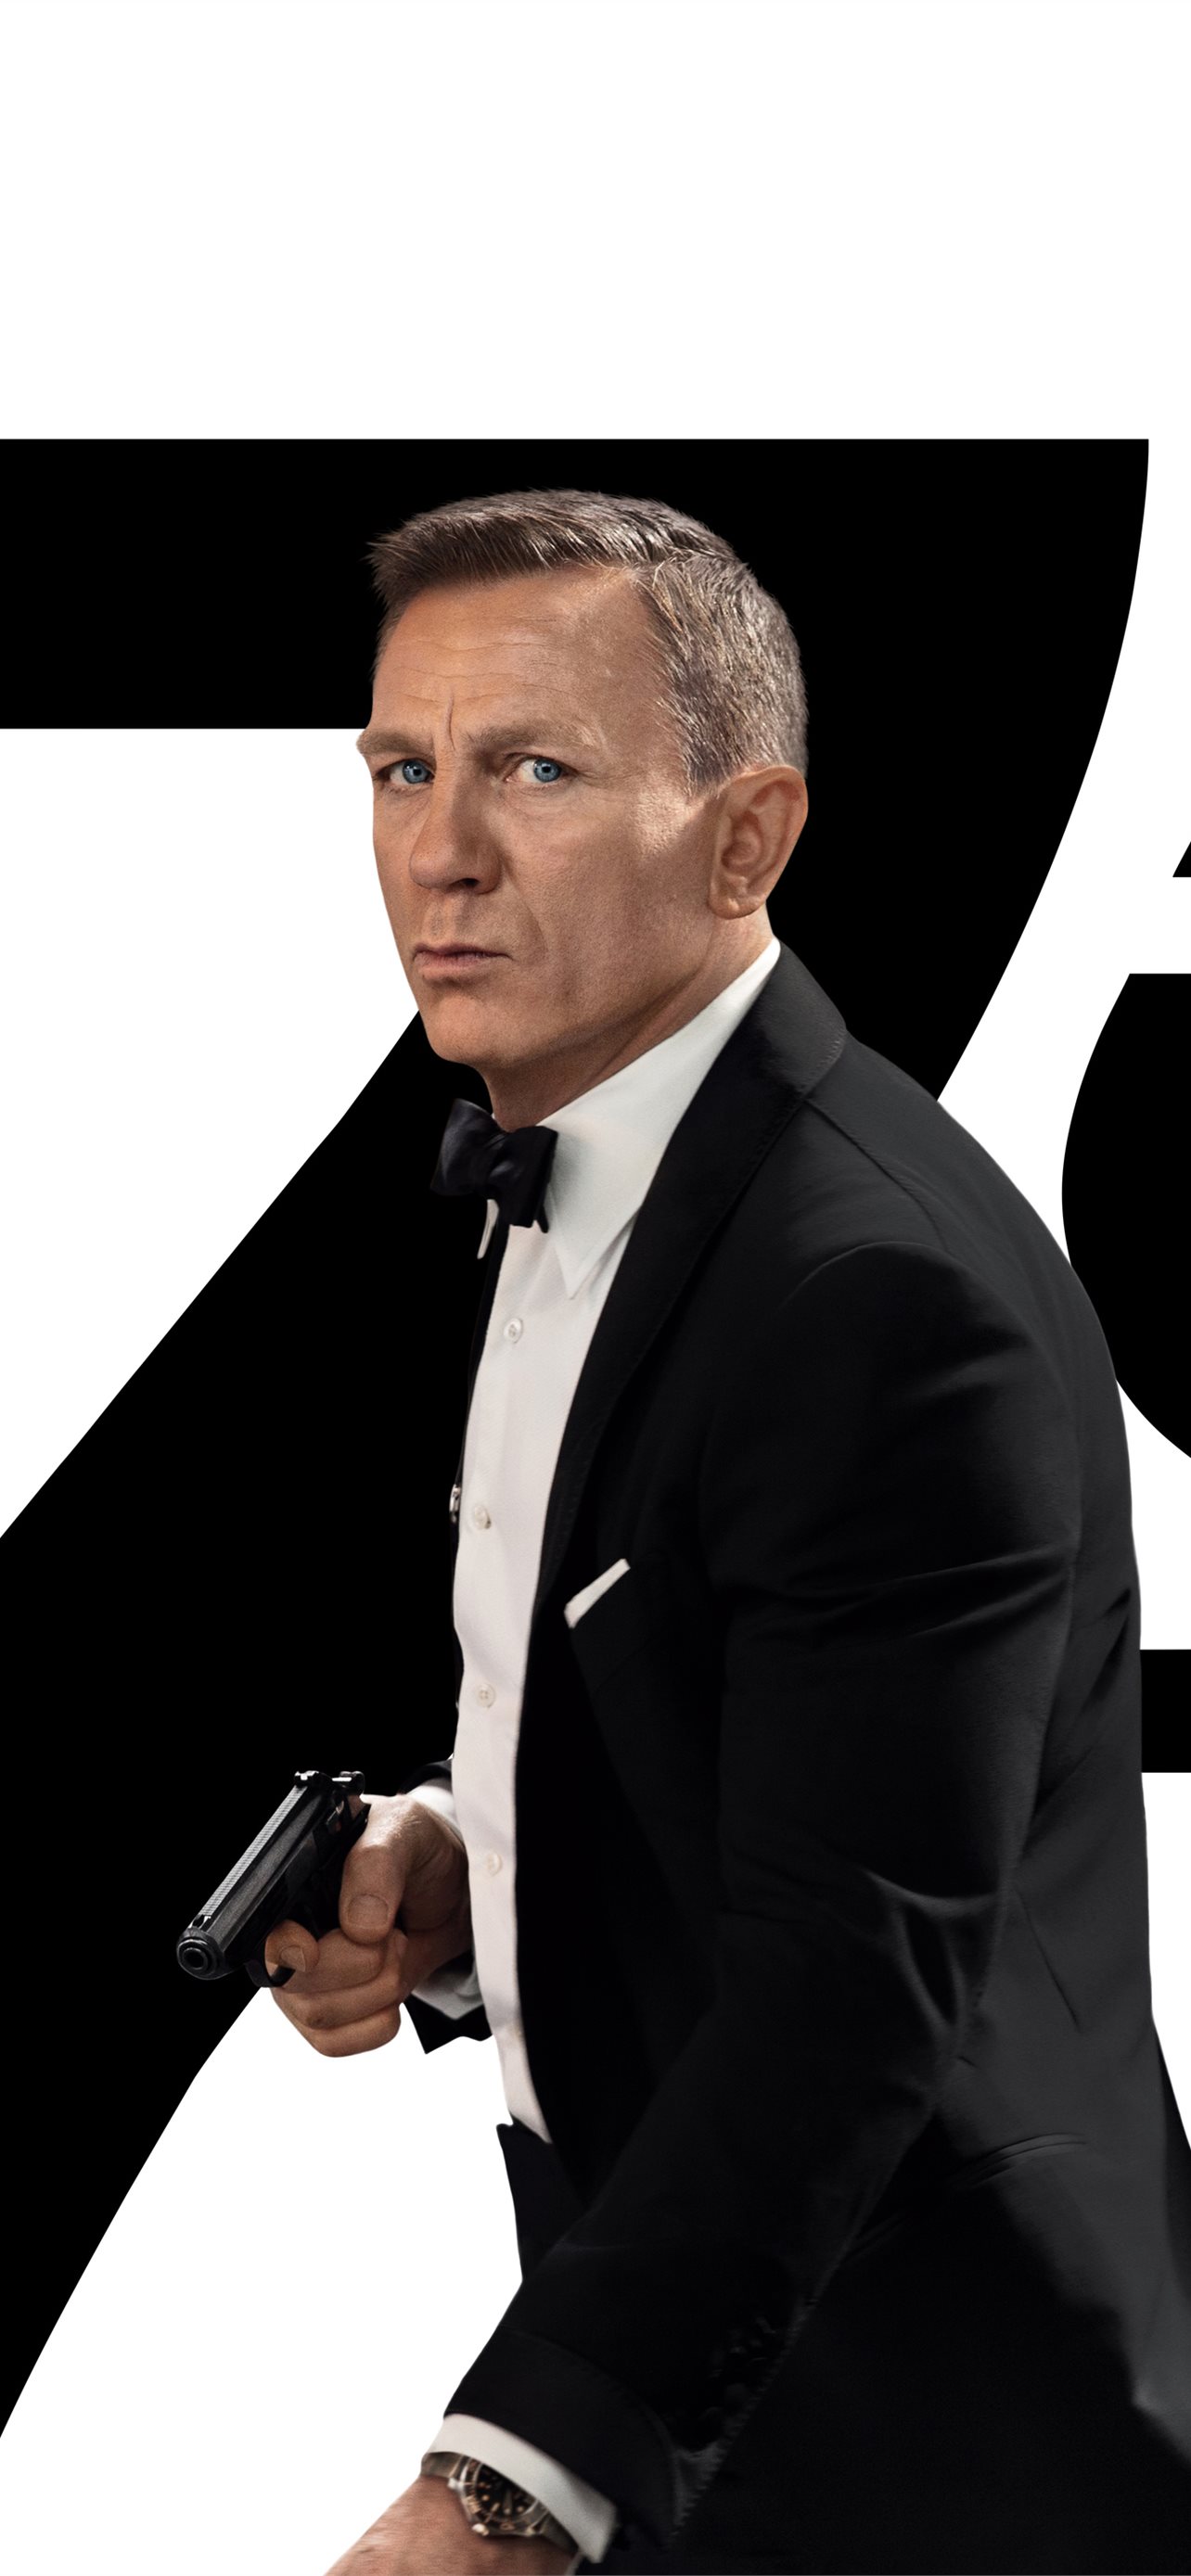 James Bond Wallpaper 78 images